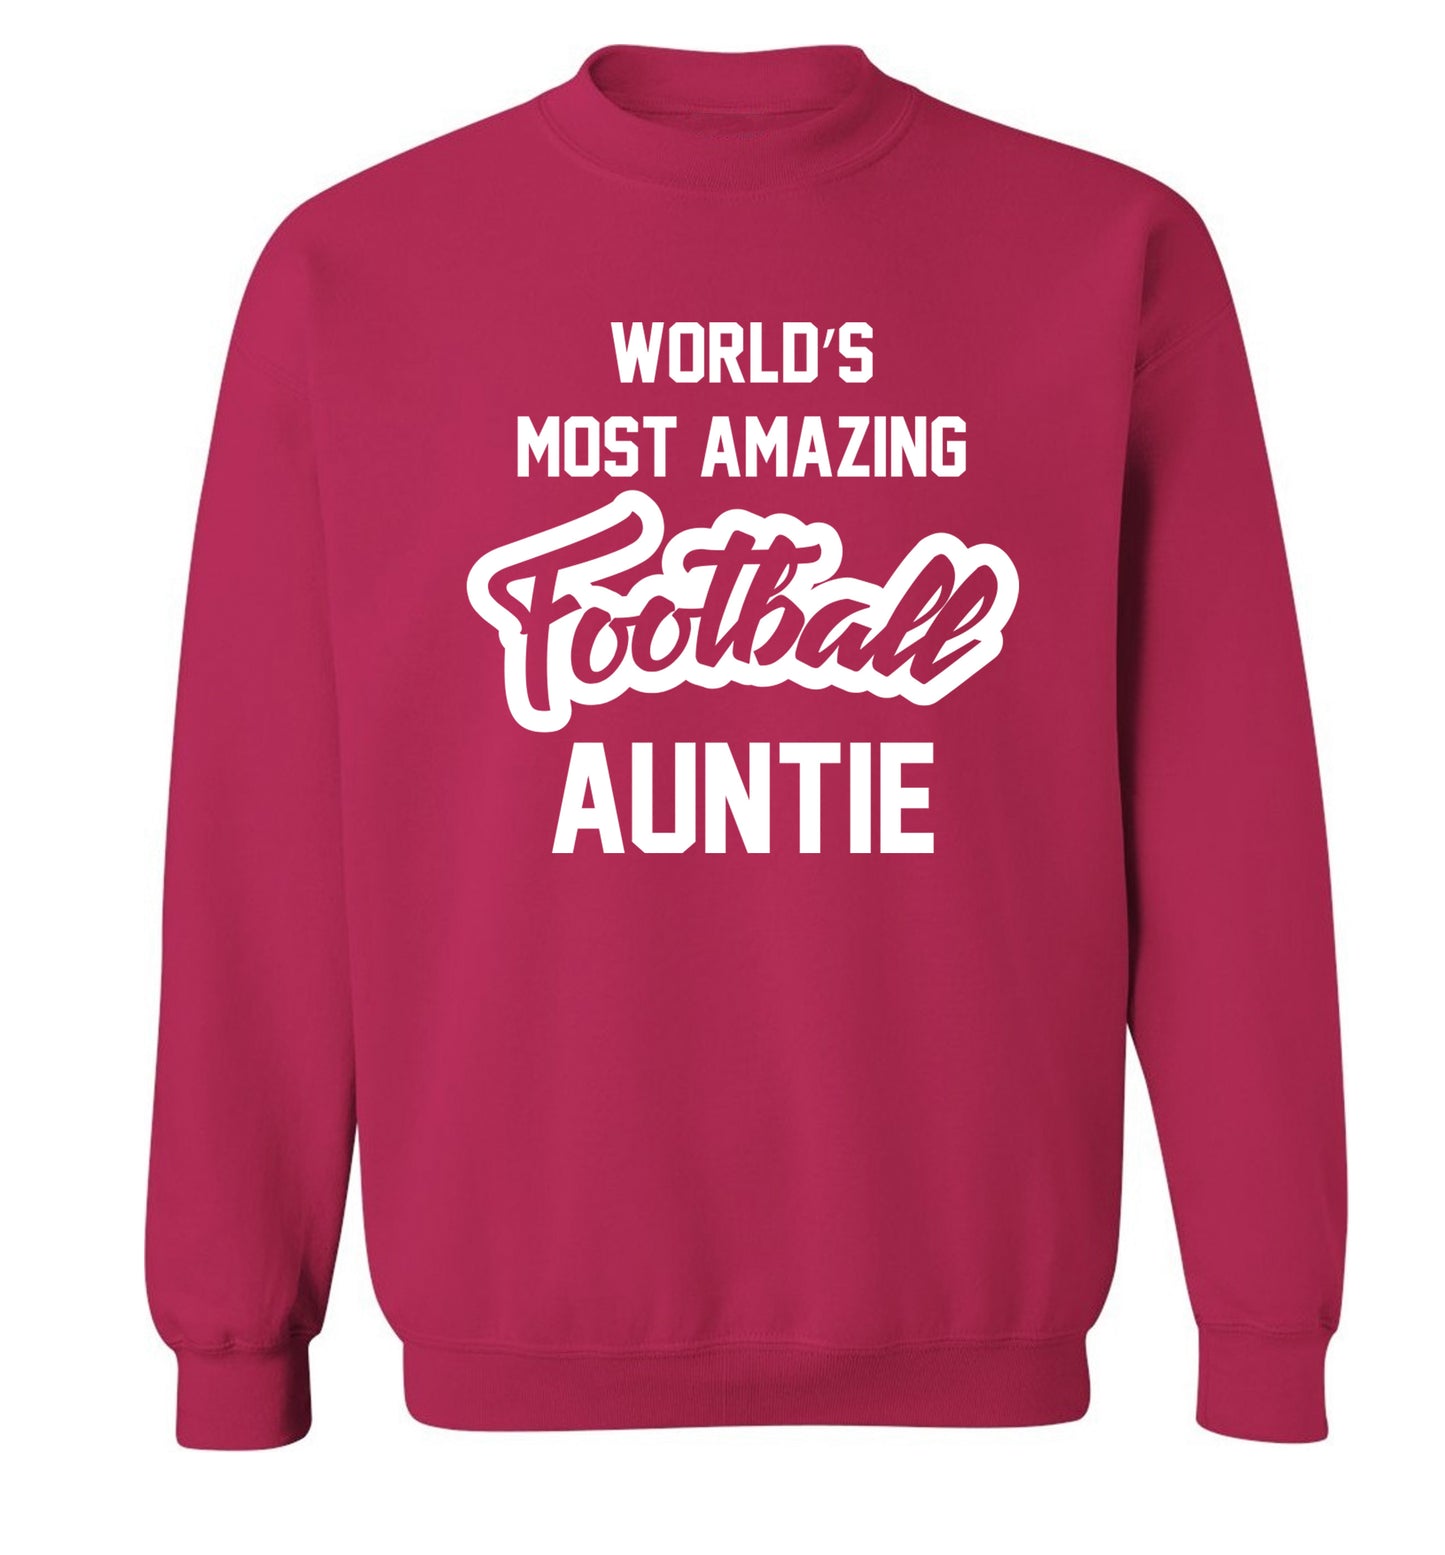 Worlds most amazing football auntie Adult's unisexpink Sweater 2XL